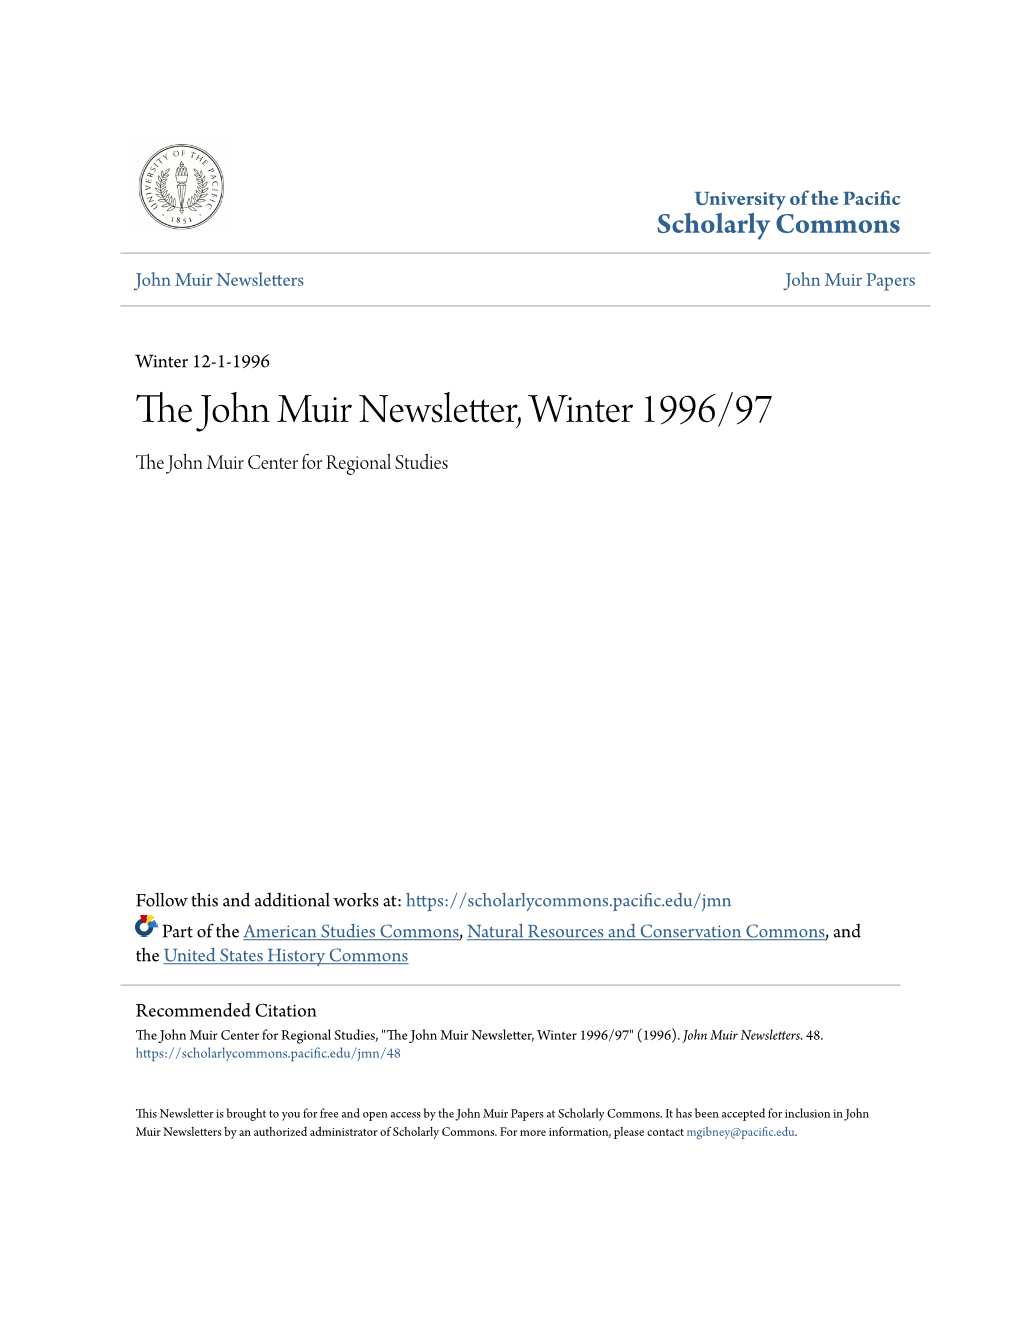 The John Muir Newsletter, Winter 1996/97